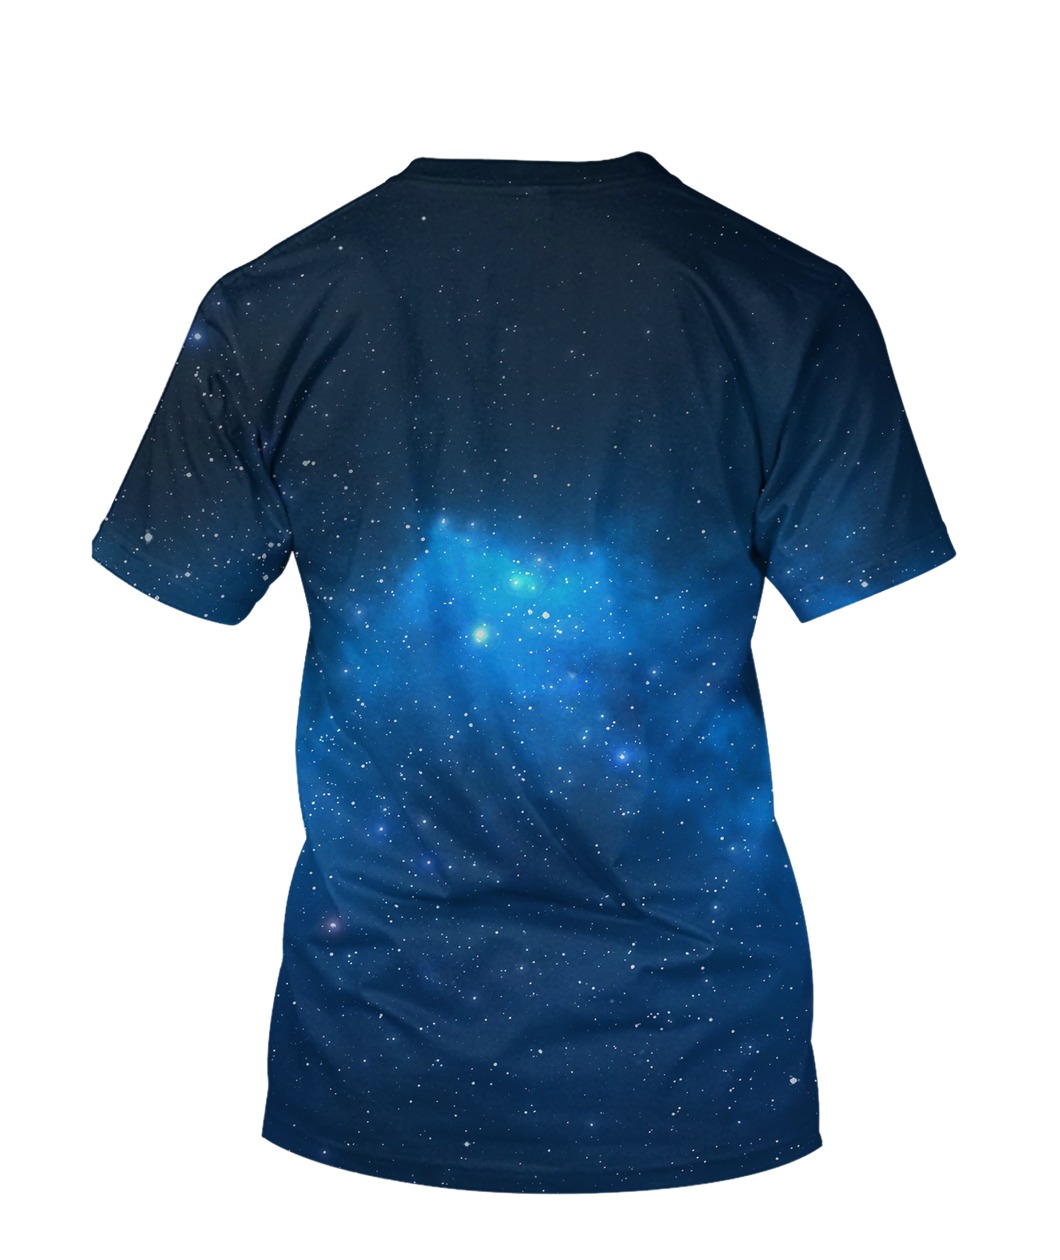 Flower galaxy full printing tshirt - back